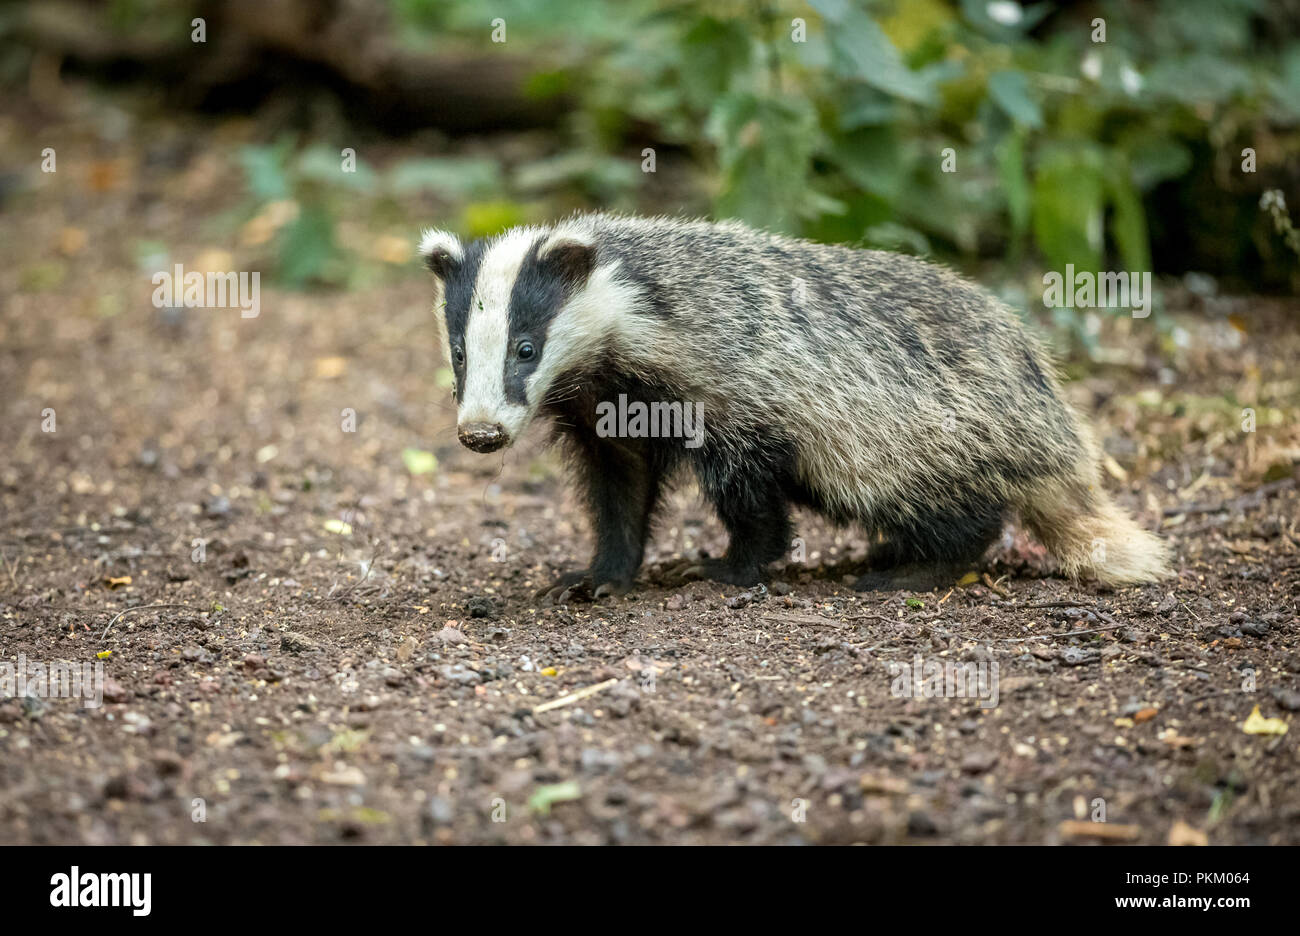 Badger. wild, native, European badger in natural woodland setting.  Scientific name: Meles meles.  Facing left. Landscape.  Horizontal. Stock Photo